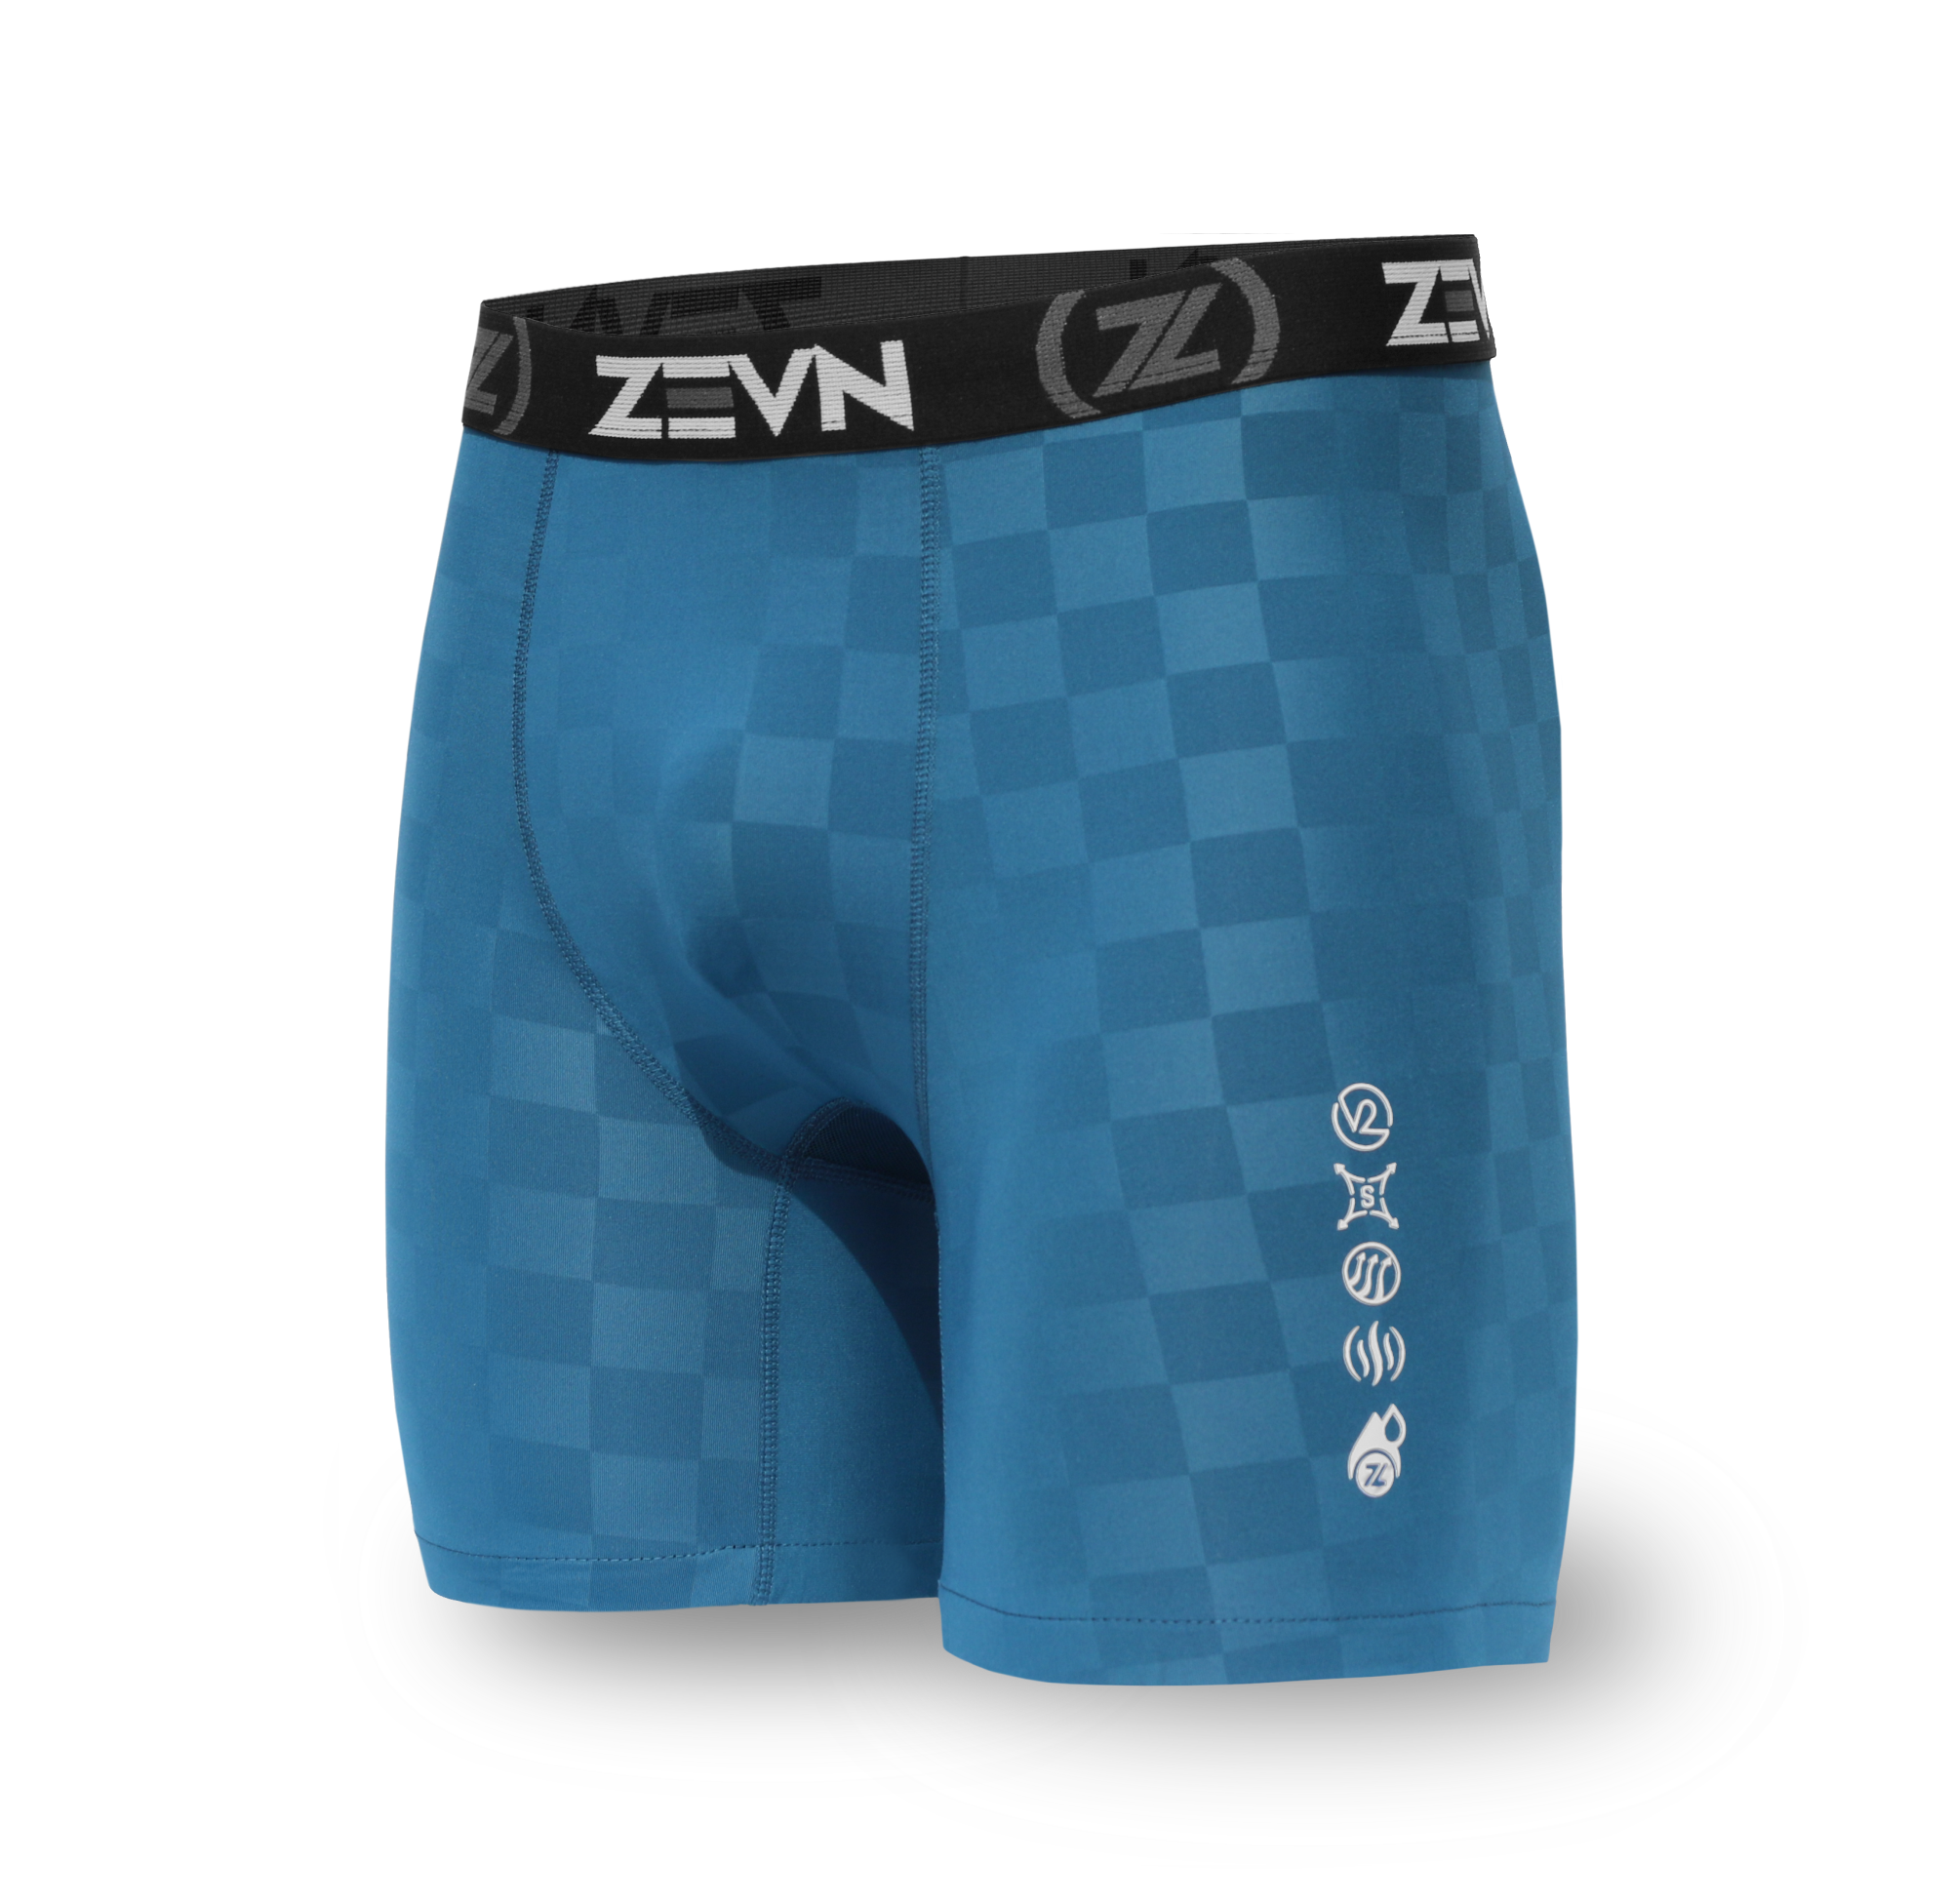 Men V2 – ZEVN USA Sports Underwear